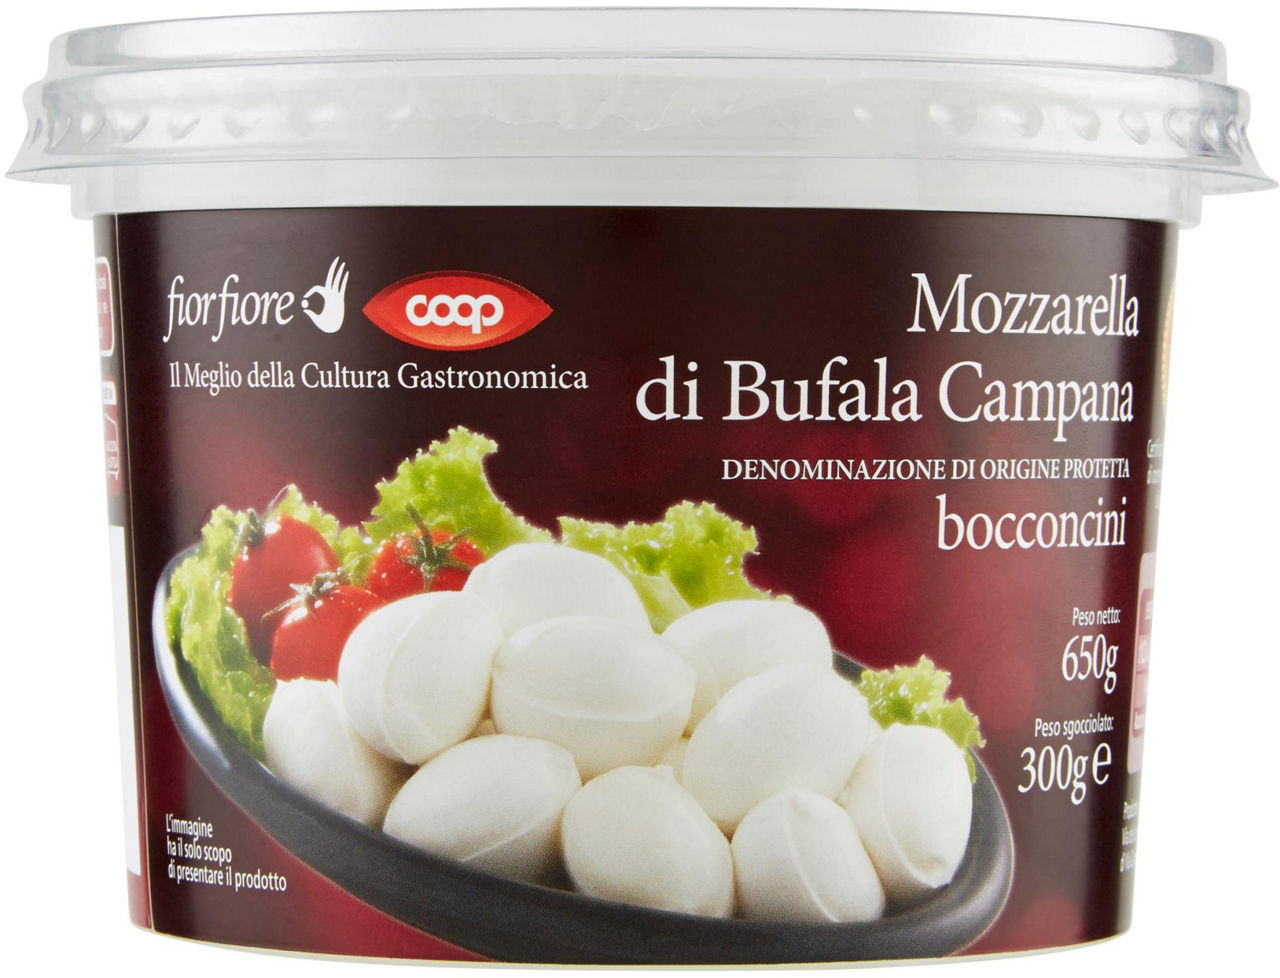 Mozzarella bufala campana dop bocconcini fior fiore coop 640 g sgocc. 300 g